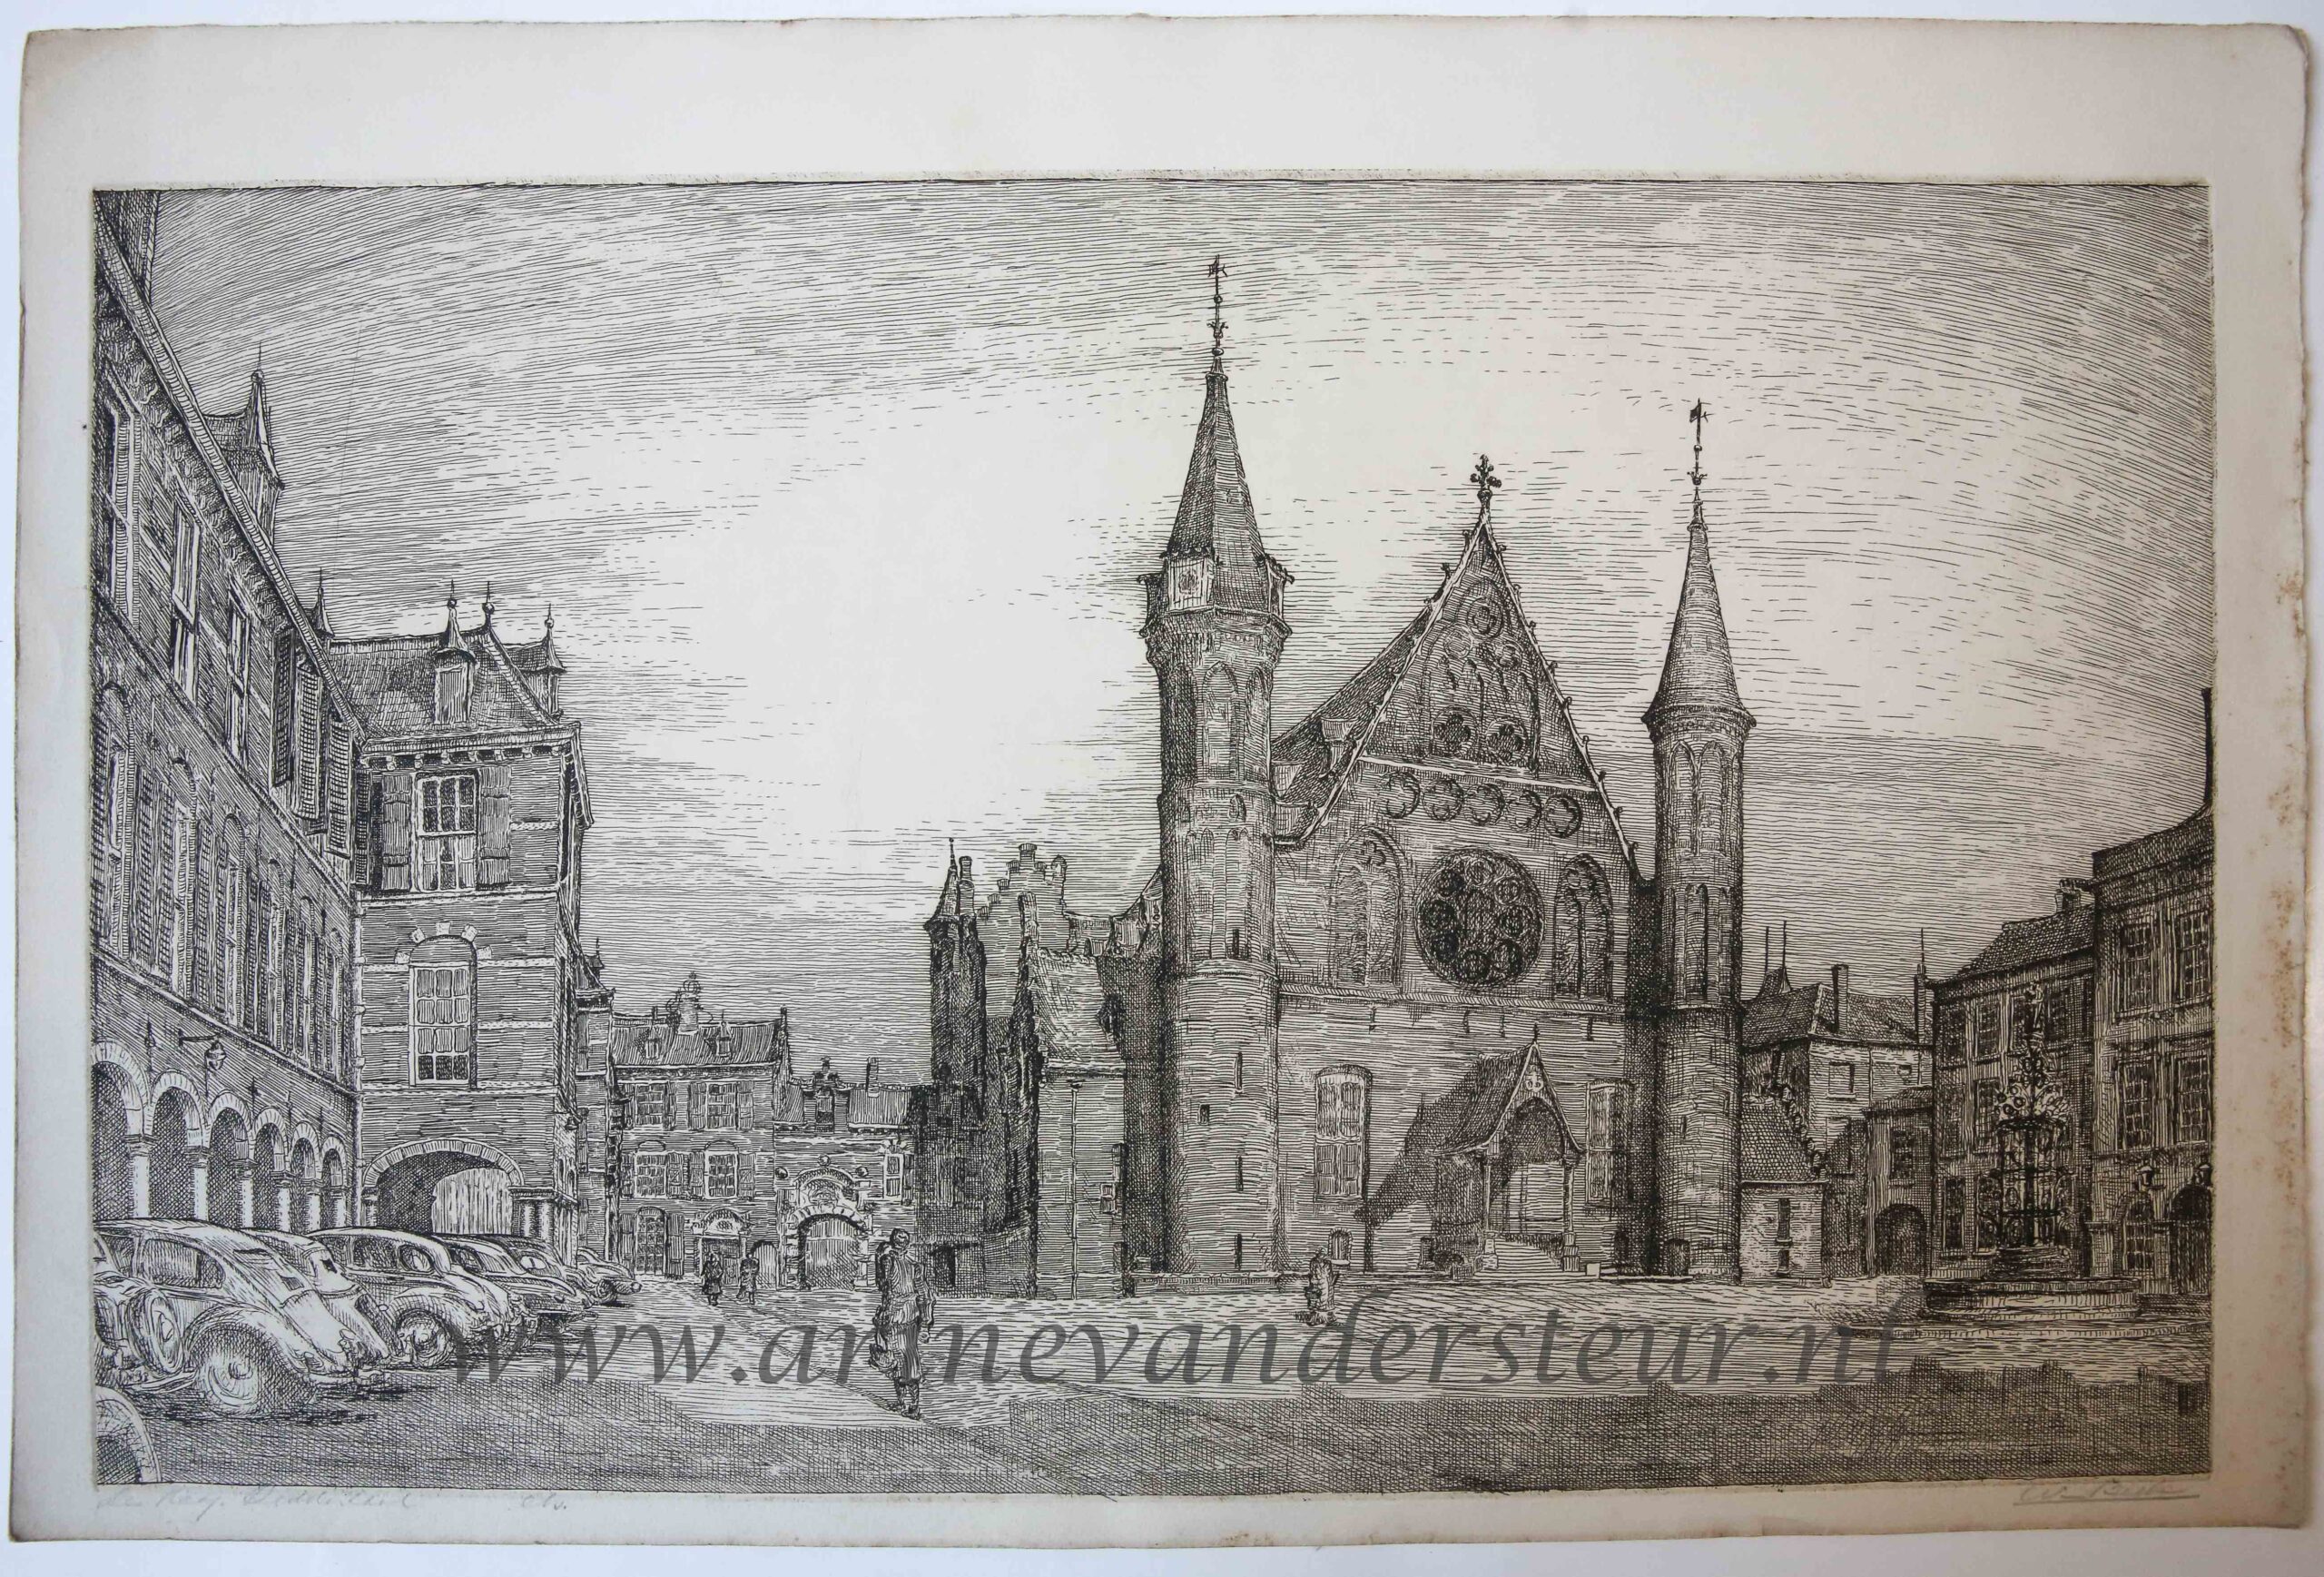  - [Modern print, etching] De Ridderzaal in The Hague/Binnenhof Den Haag, published ca. 1960.